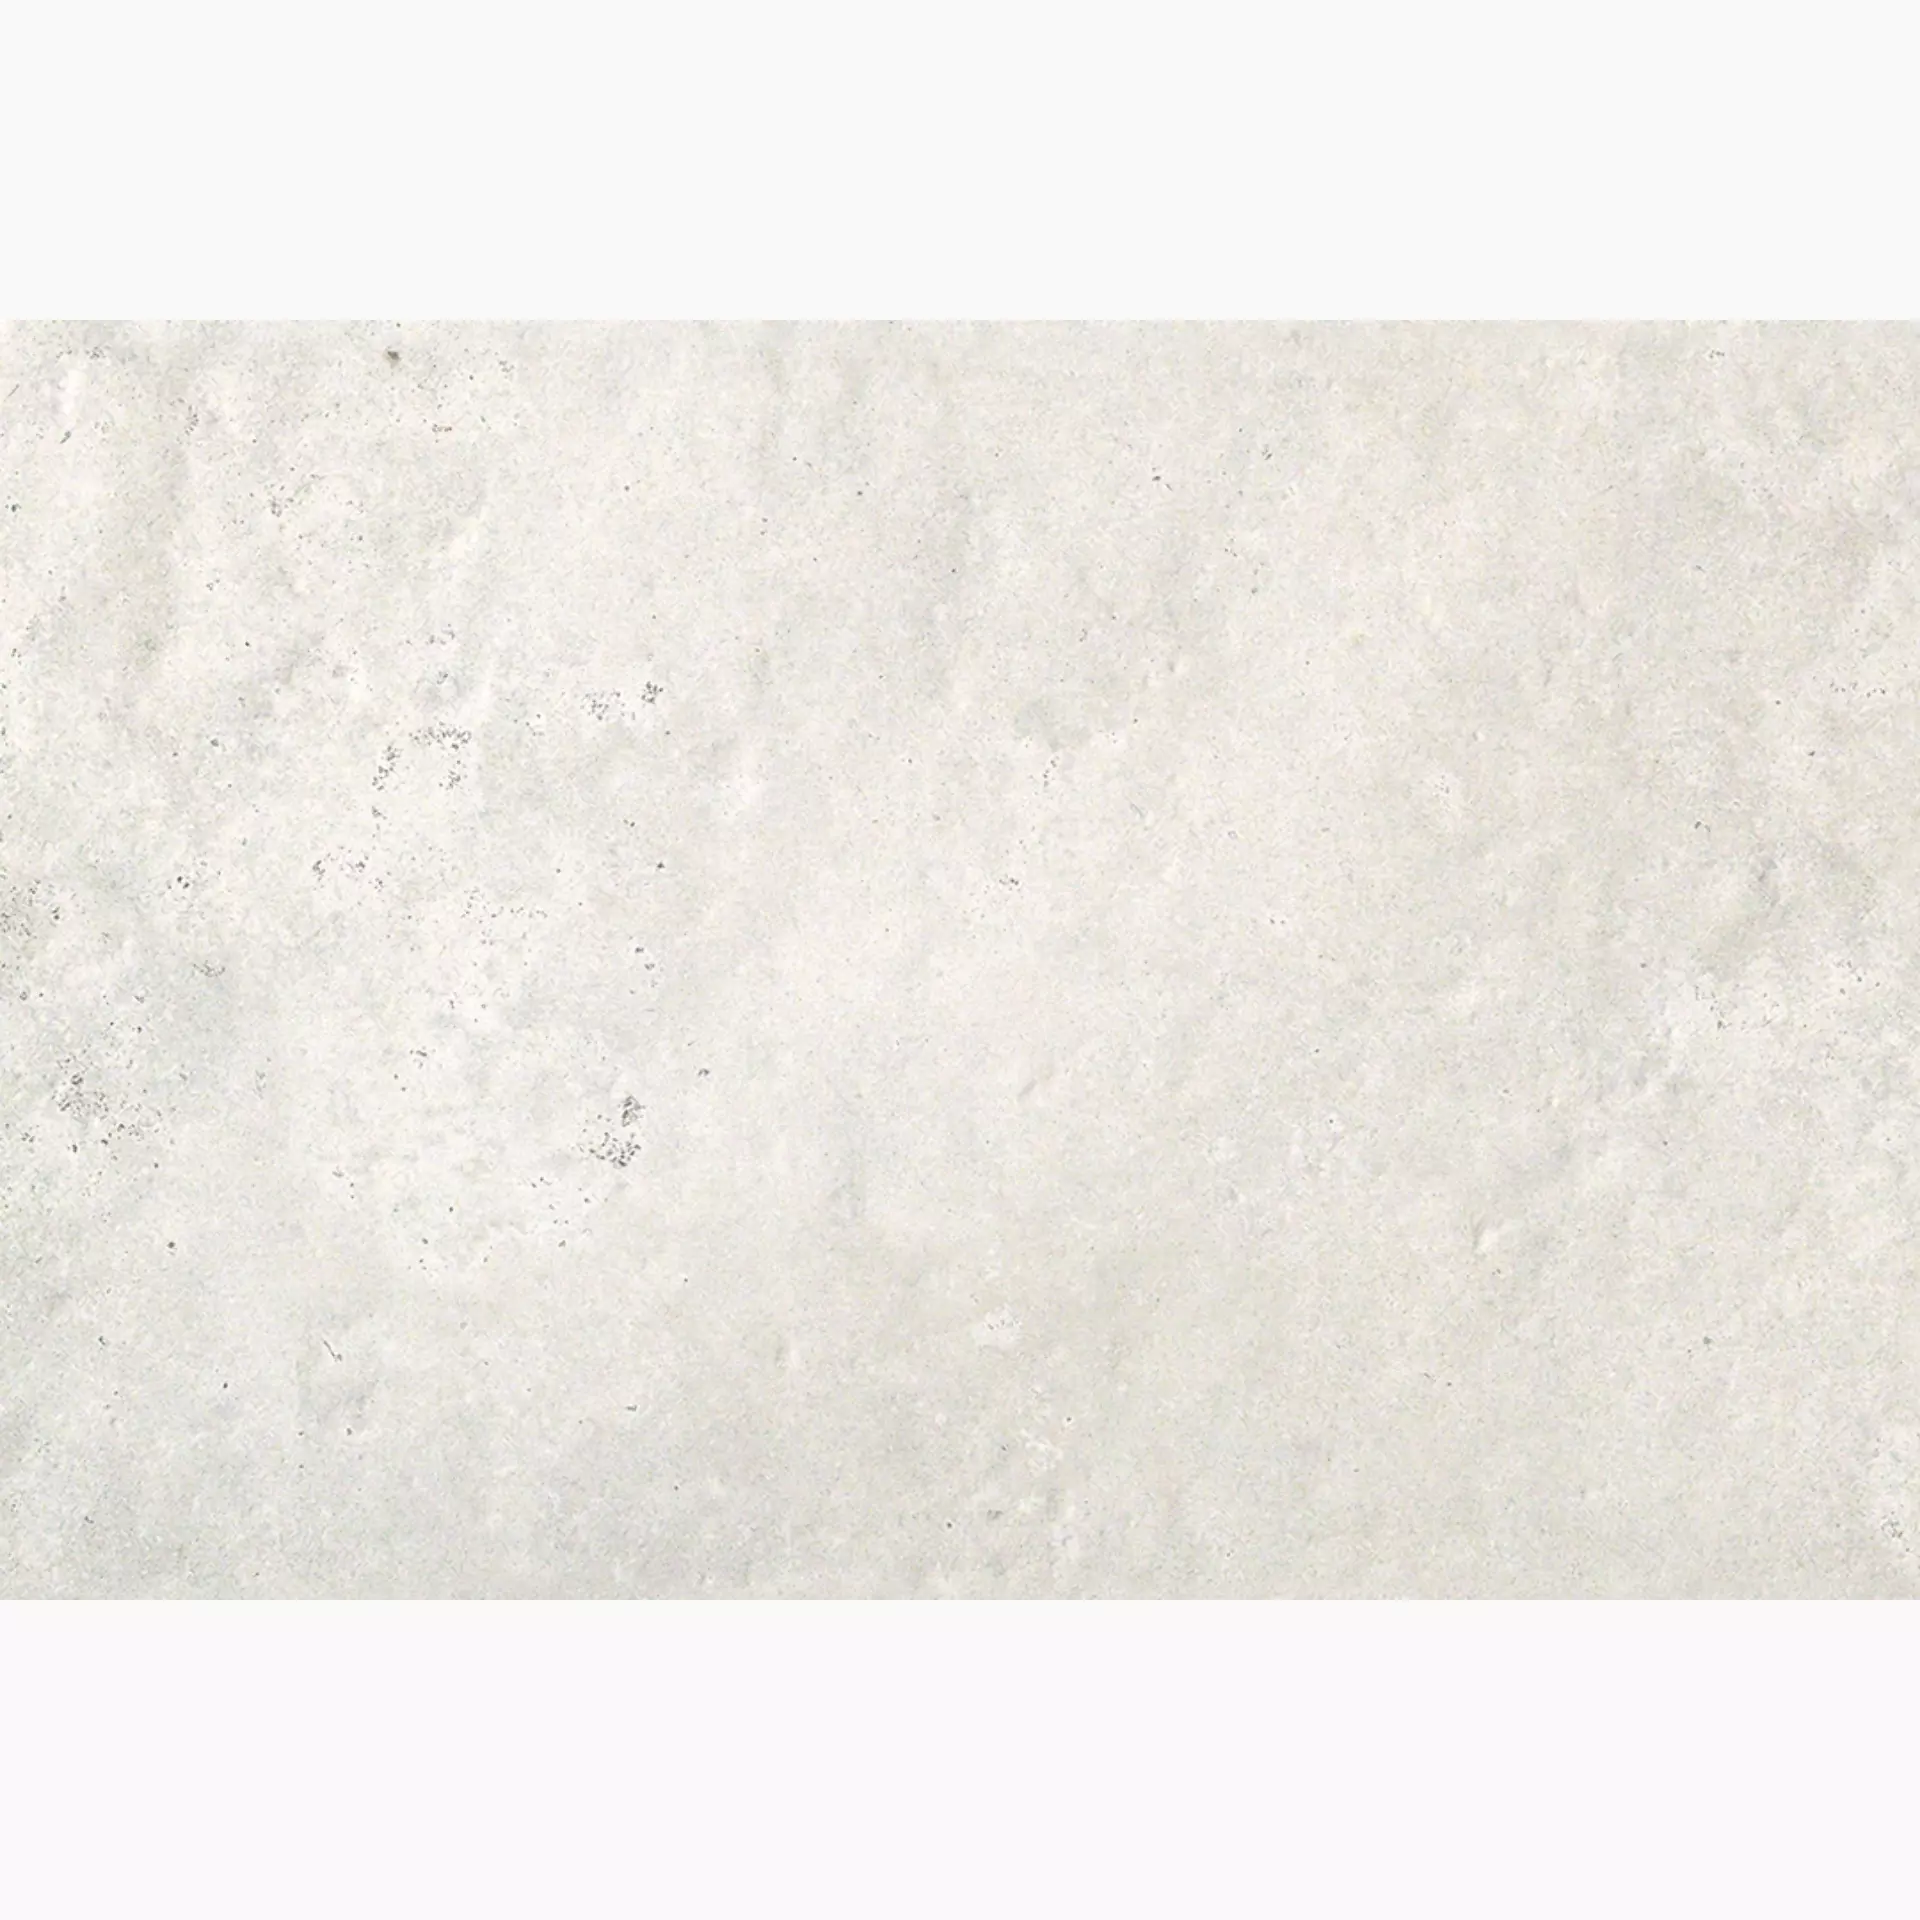 Sichenia Chambord Bianco Lappato CHBP691 60x90cm 10mm